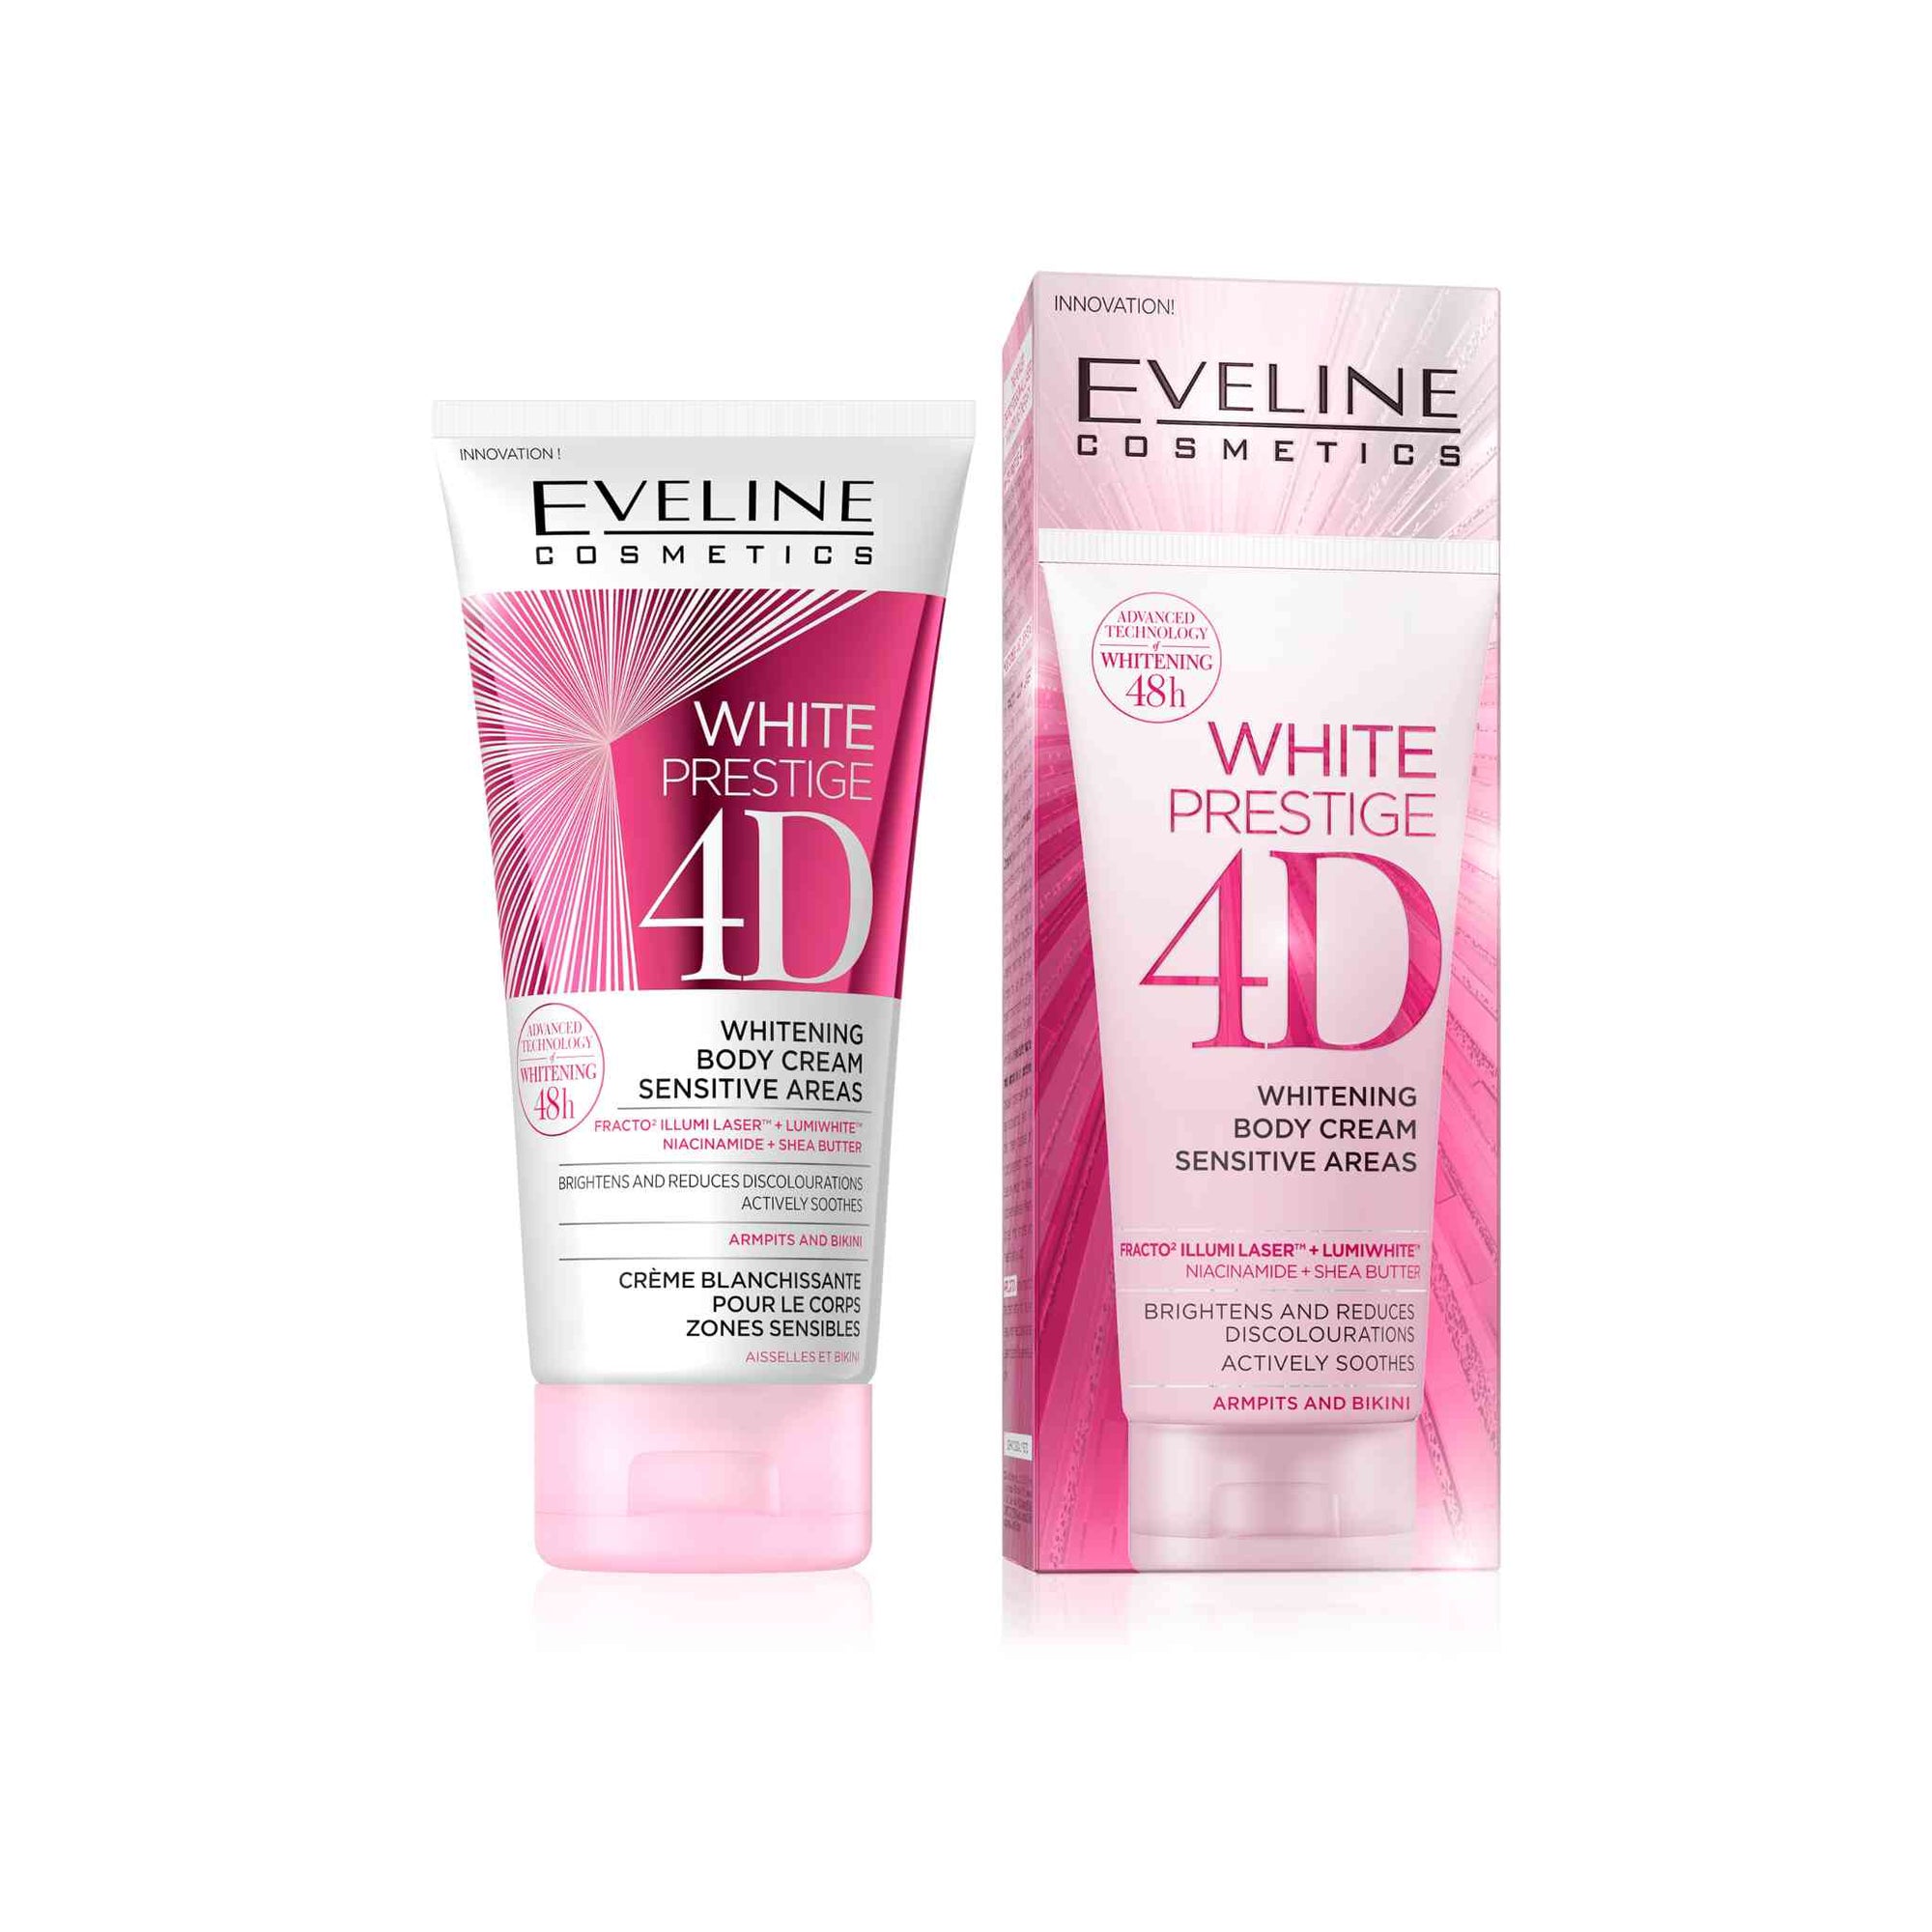 White Prestige 4D Whitening Body Cream for Sensitive Areas